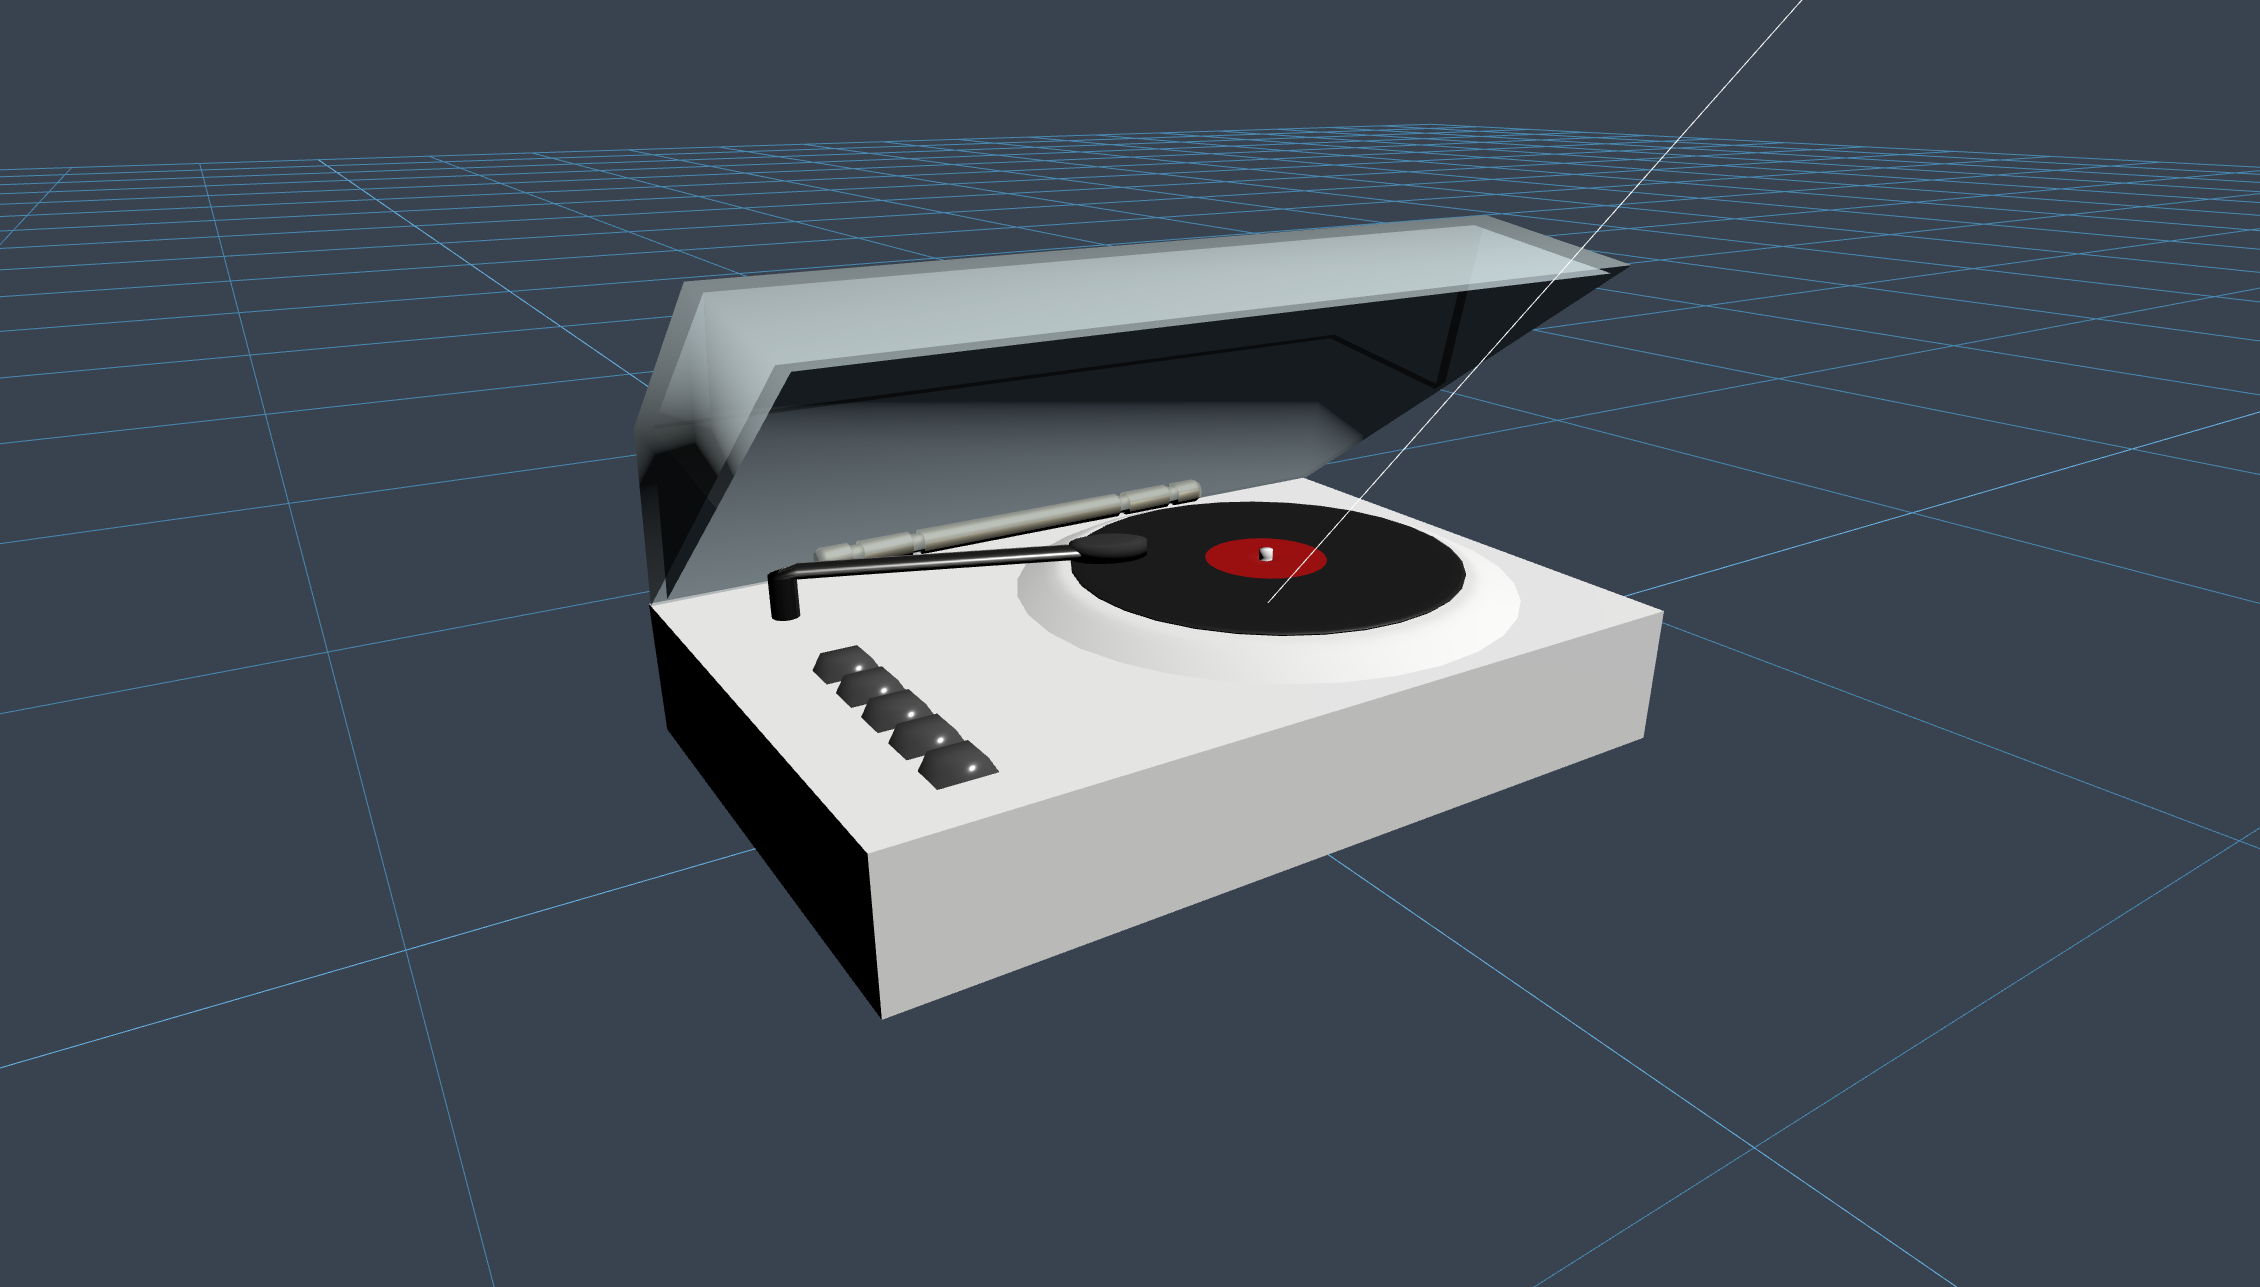 RecordPlayer - created by Niilo Korppi with 3D